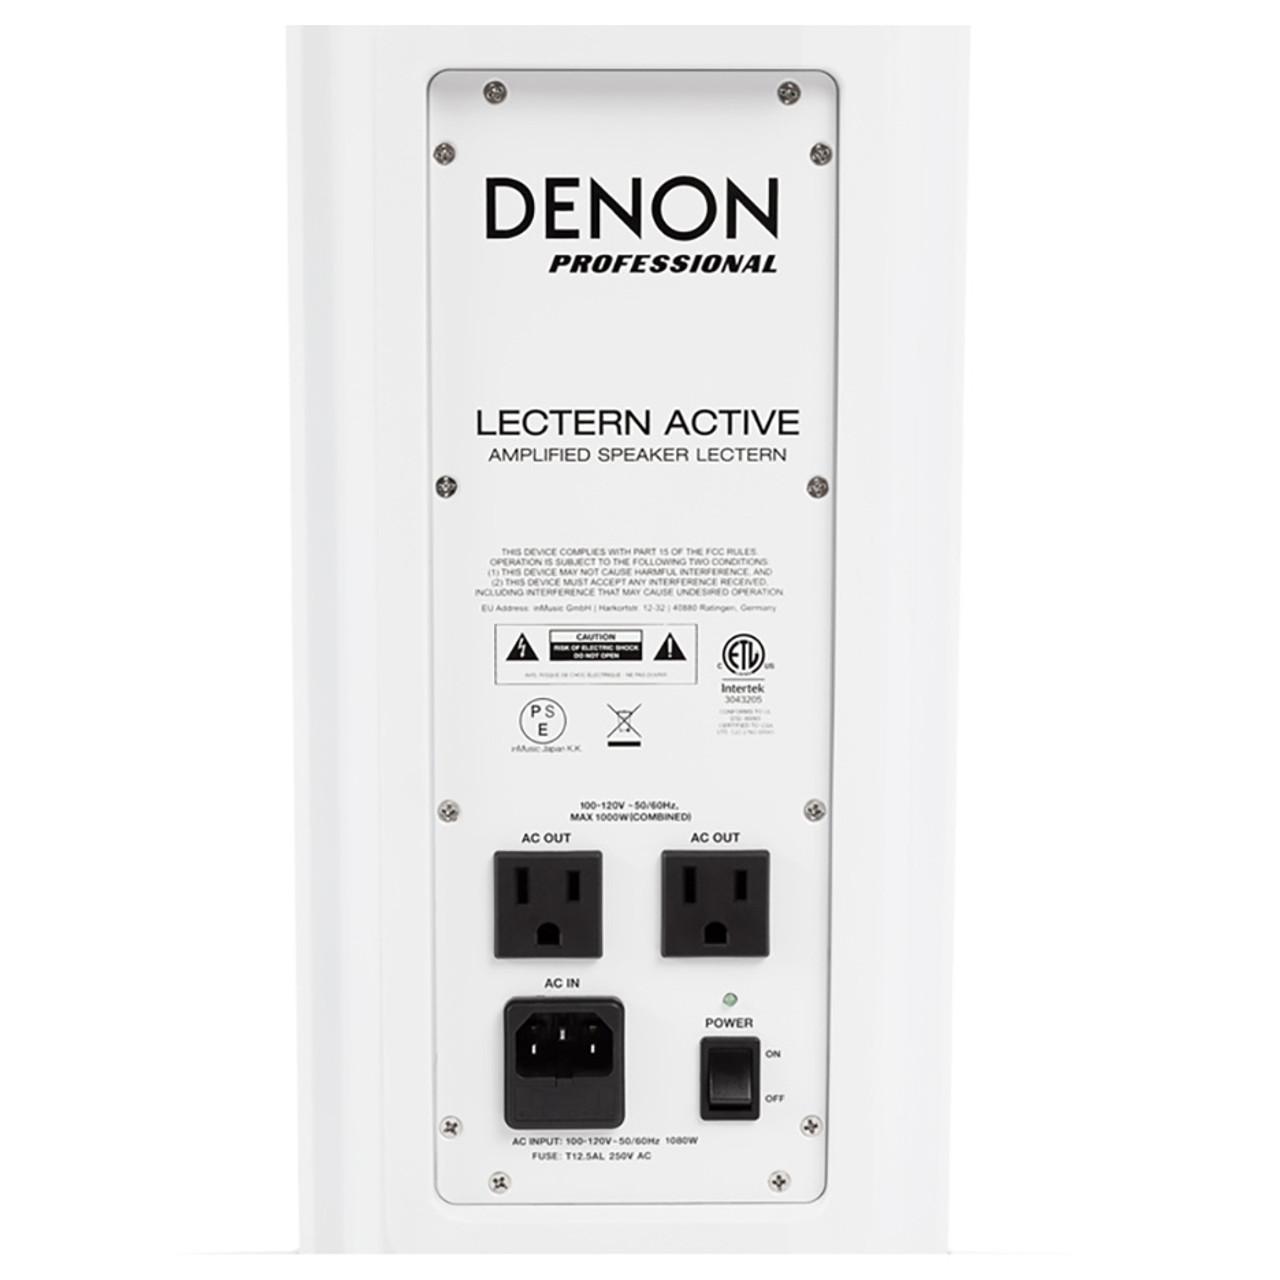 denon lectern active white